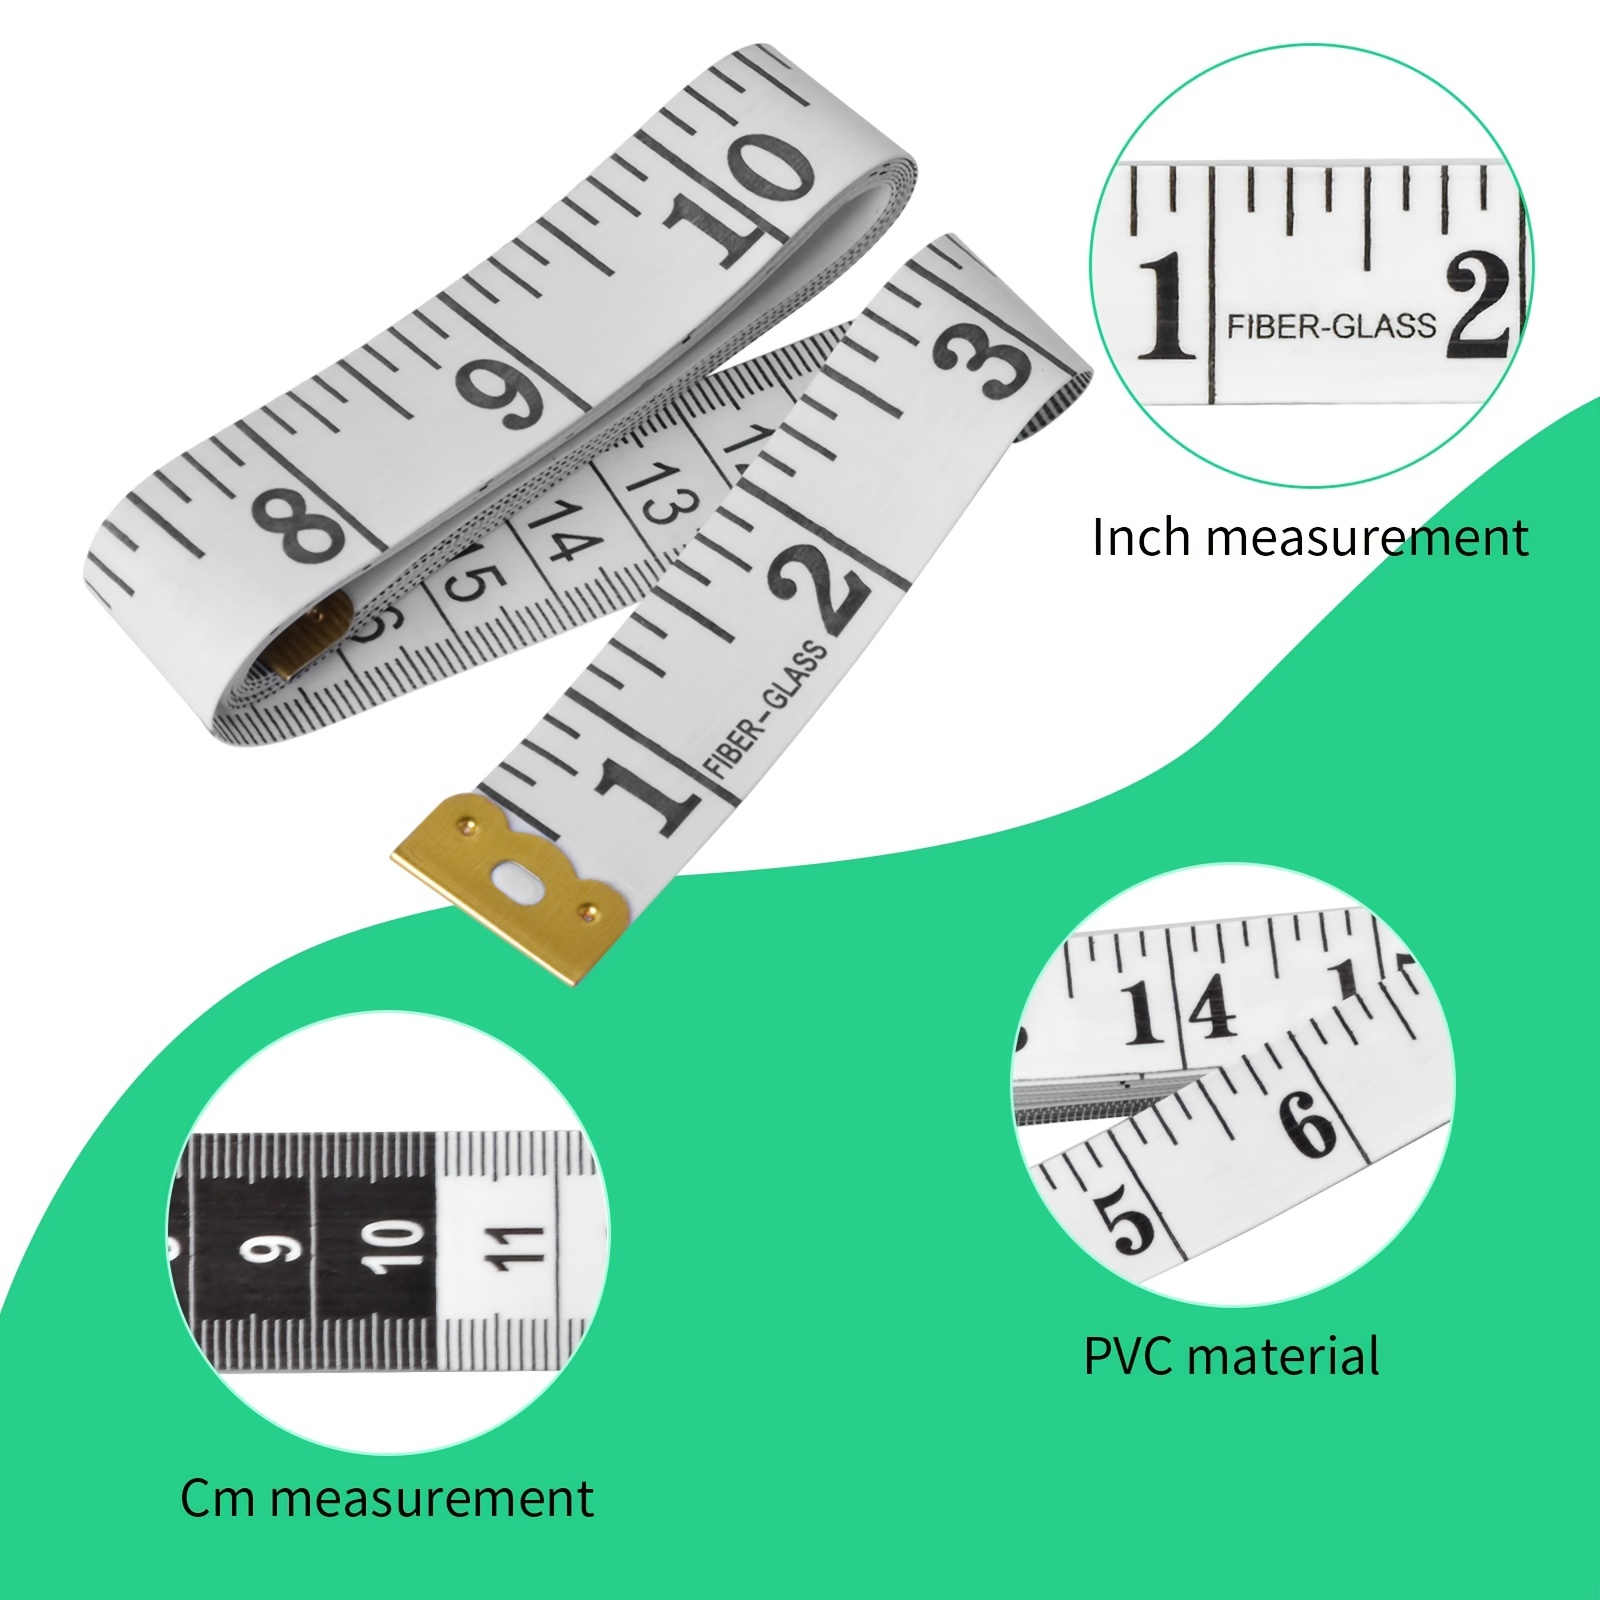 3pcs Soft Tape Measure, Body Measuring Ruler Sewing Tailor Tape Measure  Centimeter Meter Sewing Measuring Tape Soft Random Color 59.06inch